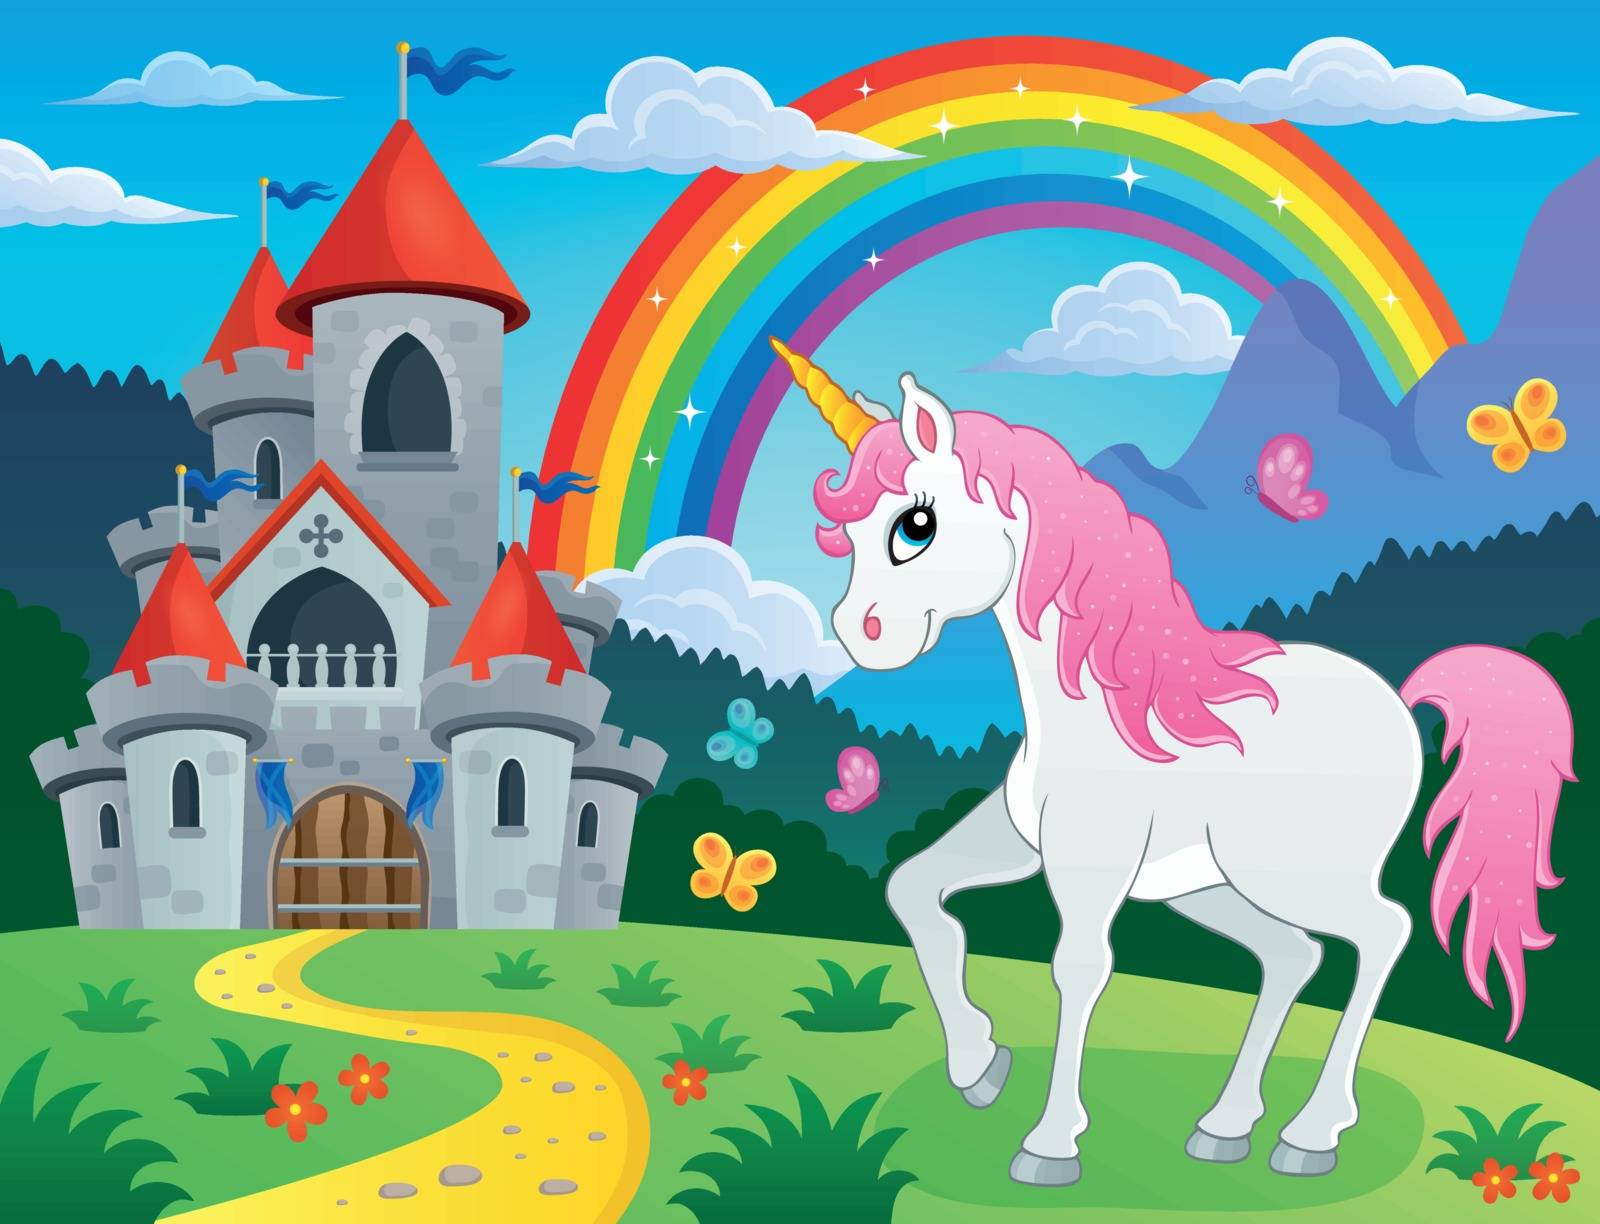 Fairy tale unicorn theme image 4 by clairev